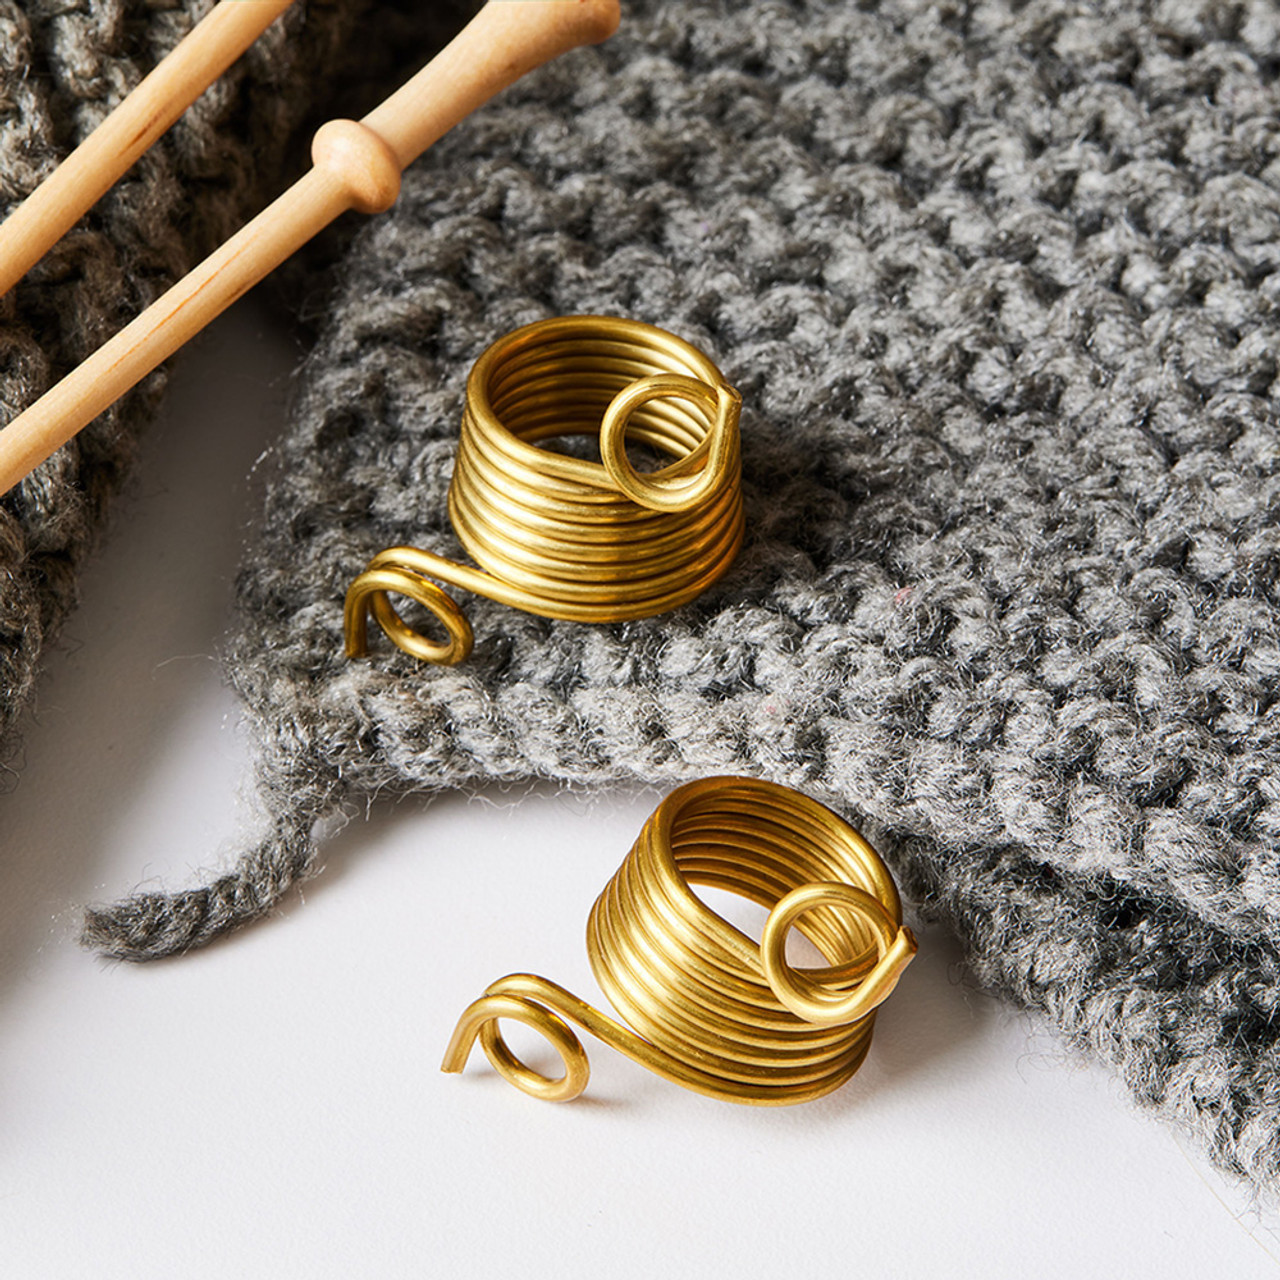 Two Brass Knitting Rings